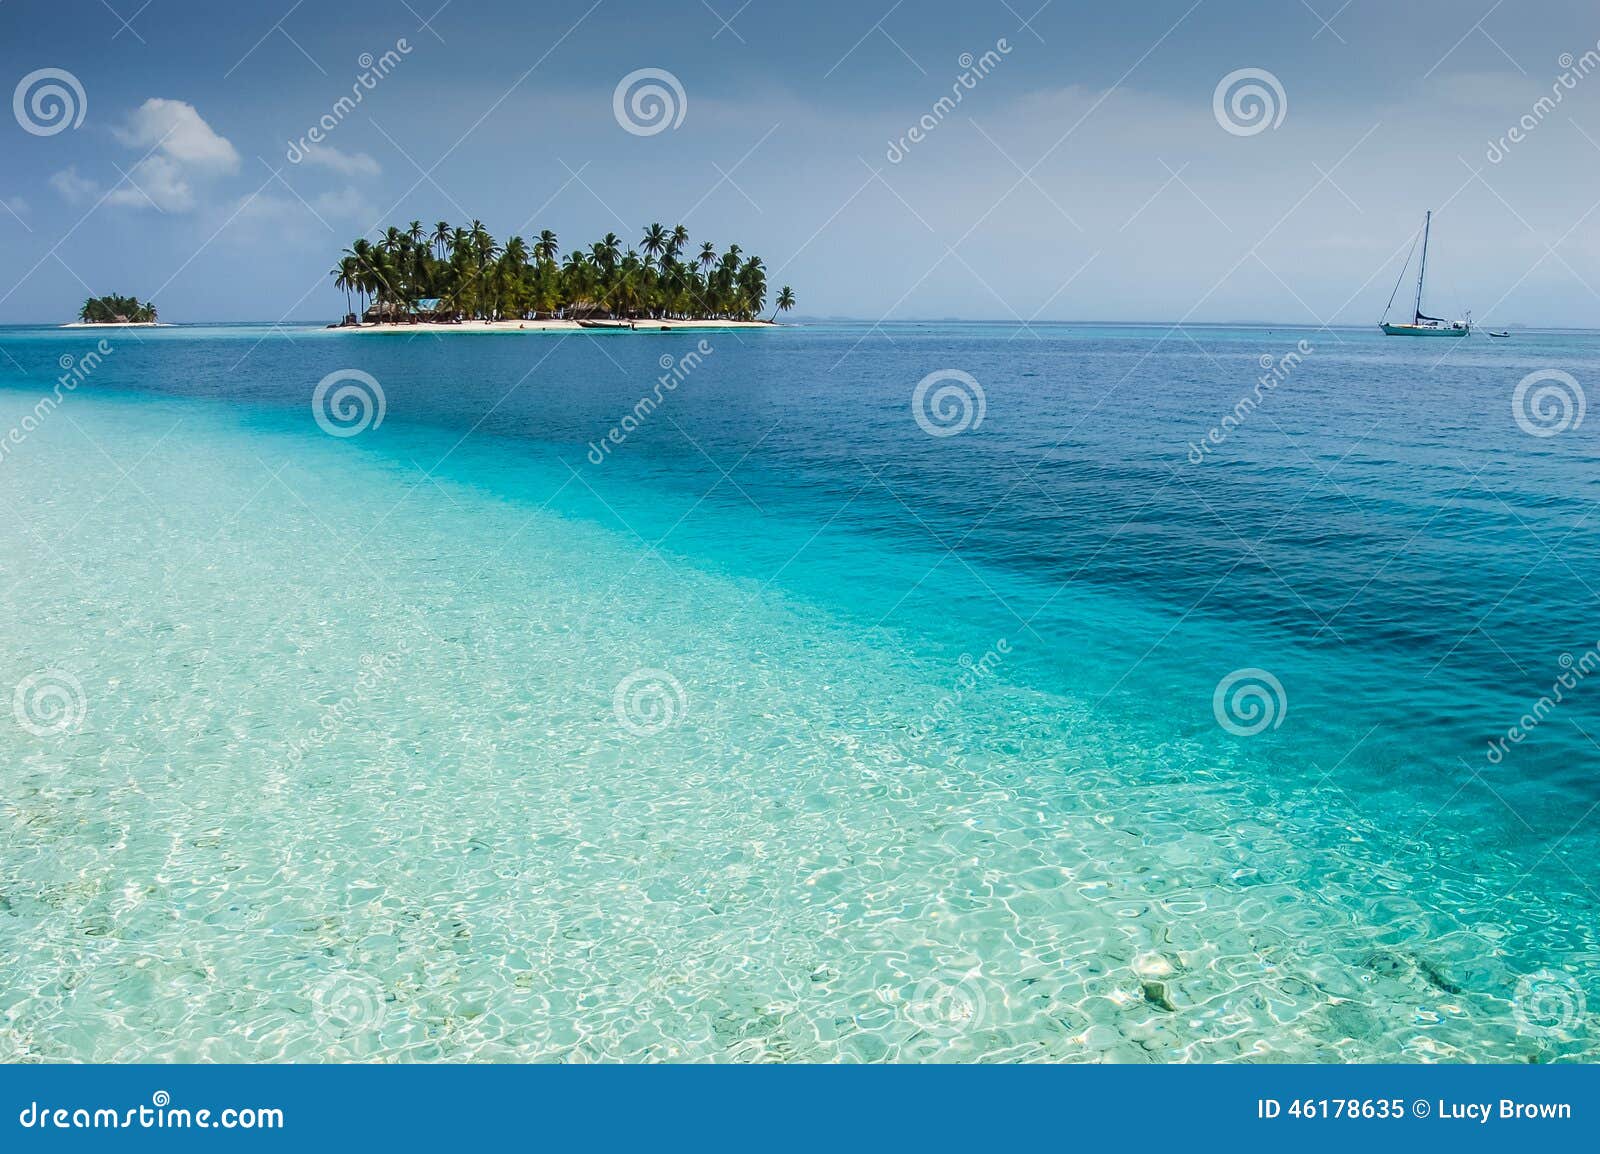 isla diablo in the san blas archipelago off the caribbean coast